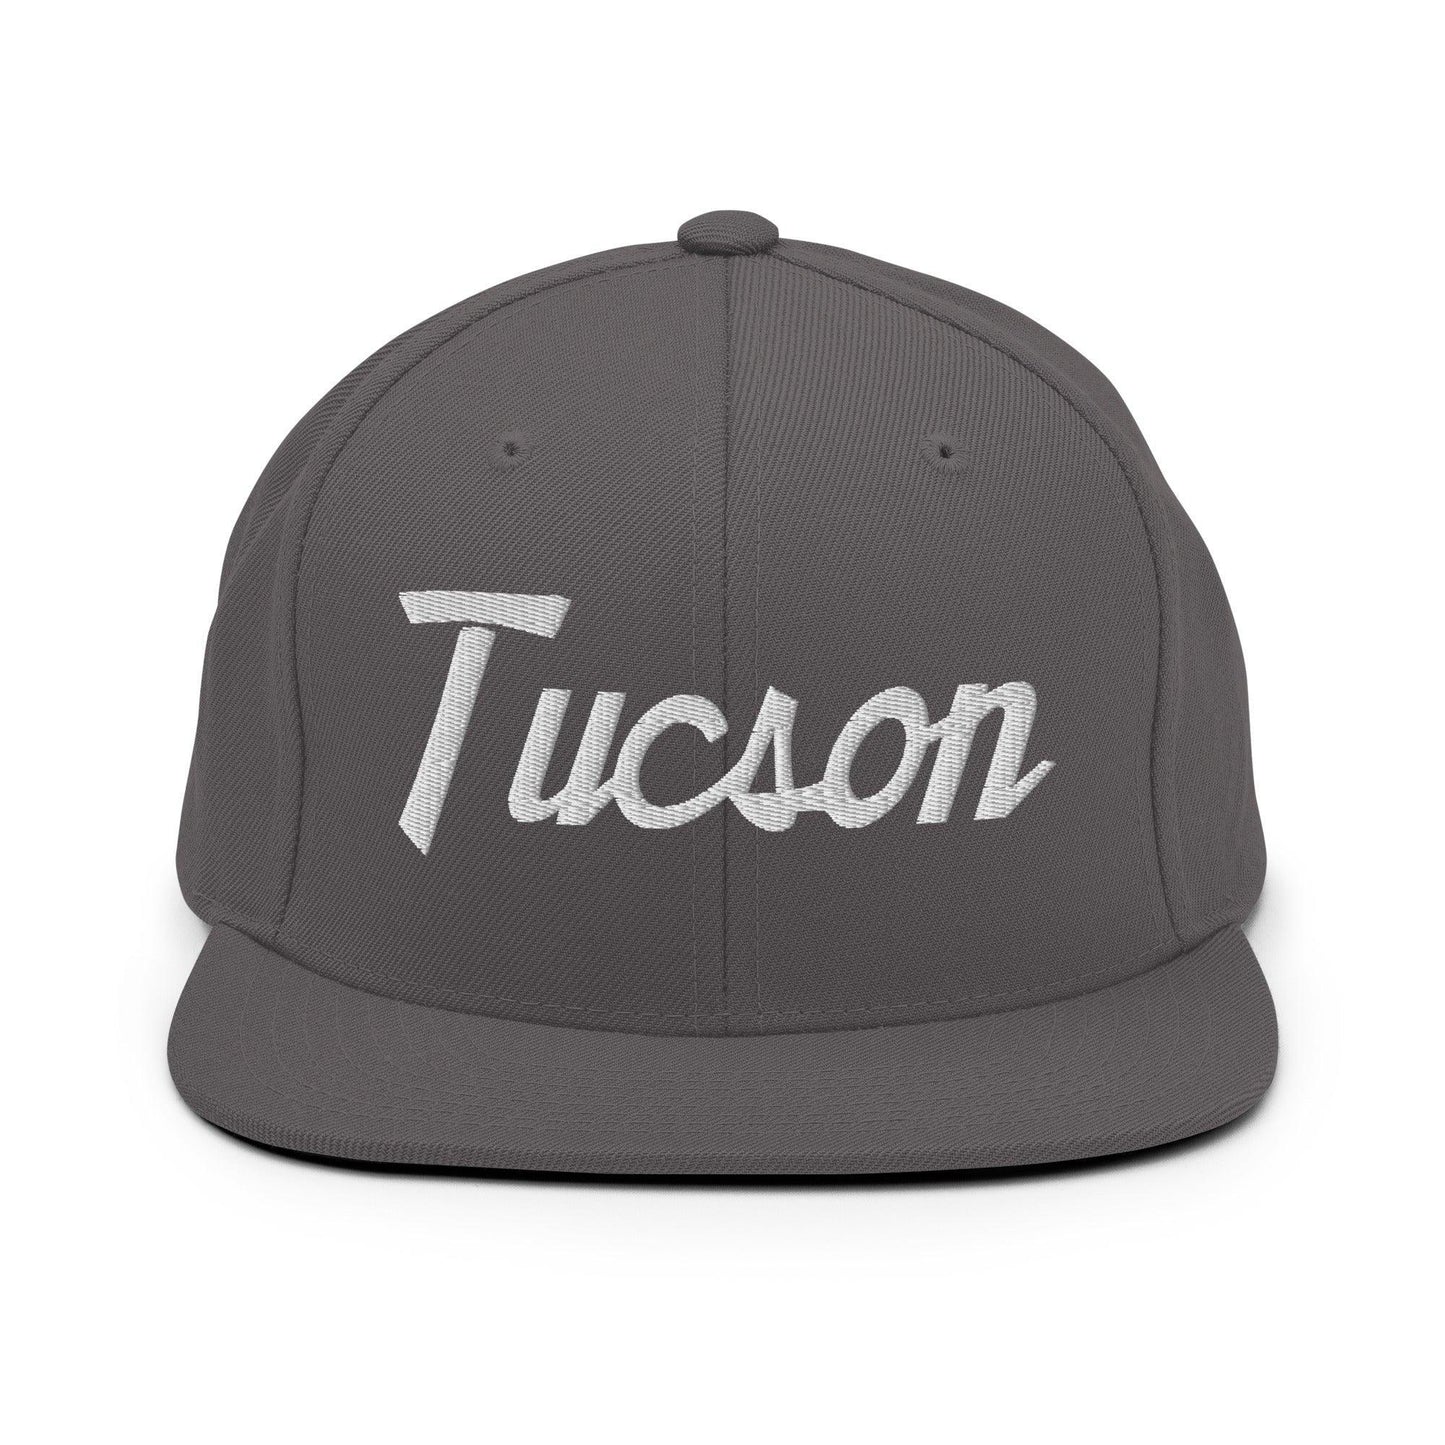 Tucson Script Snapback Hat Dark Grey